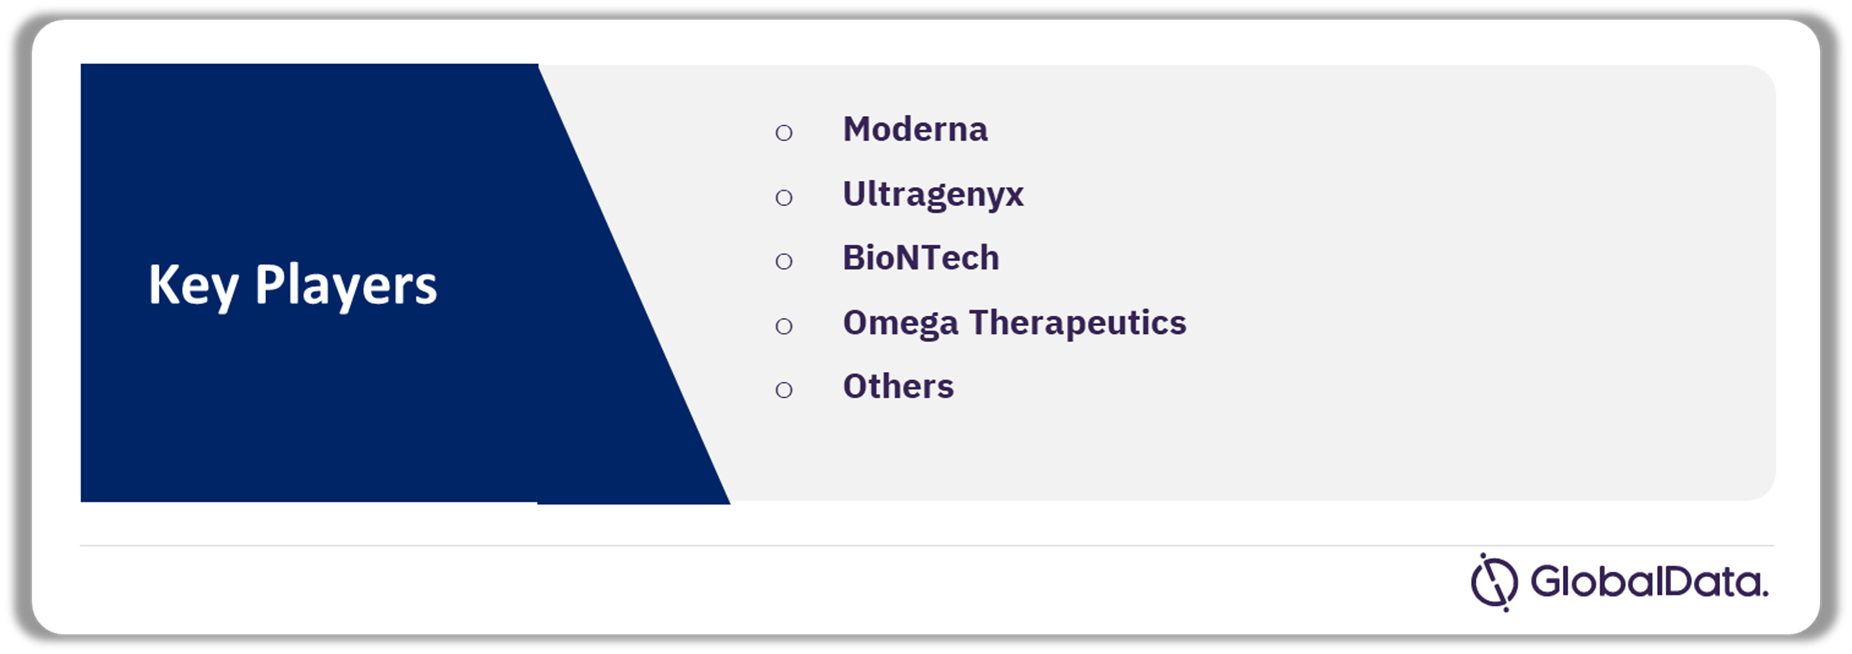 Key mRNA Therapeutics Market Players